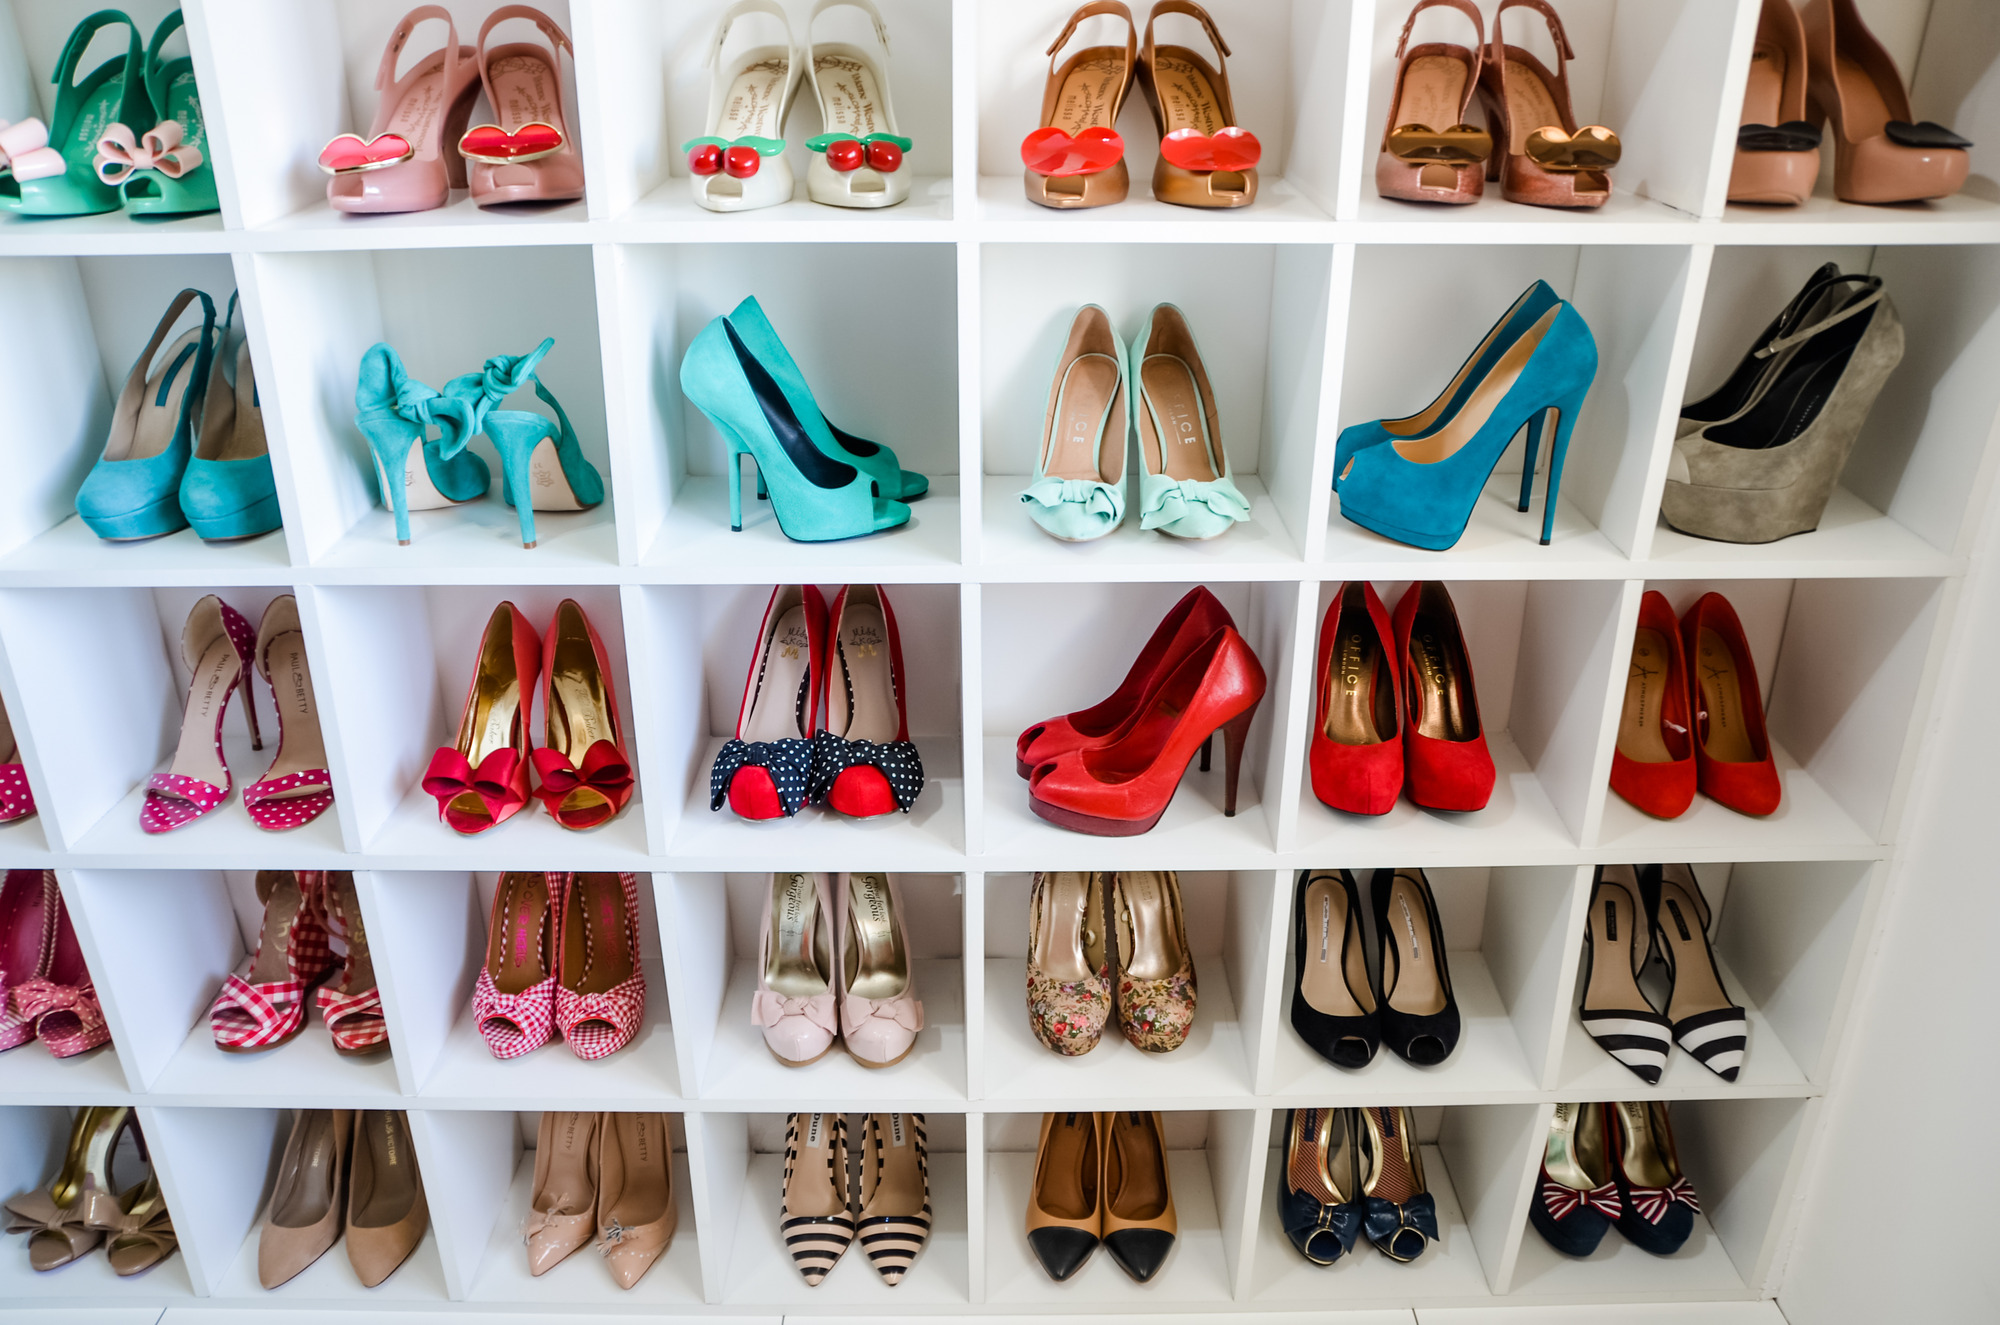 colourfuul shoes on shelves